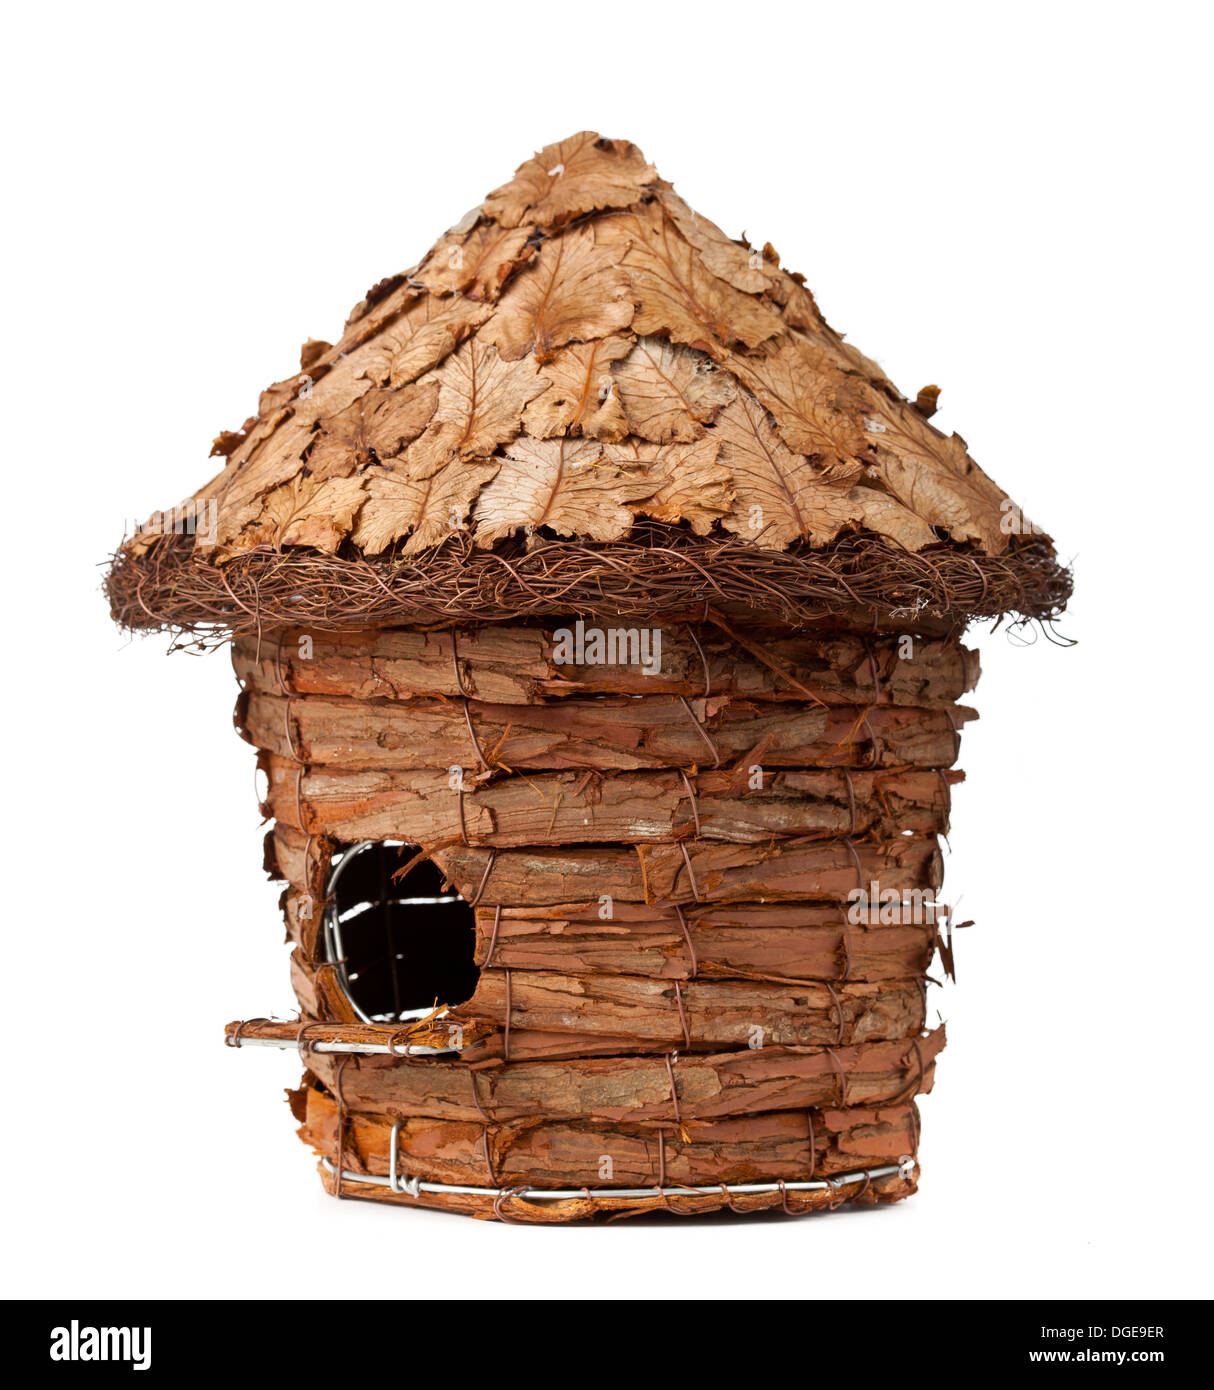 Wooden birdhouse on a white background Stock Photo